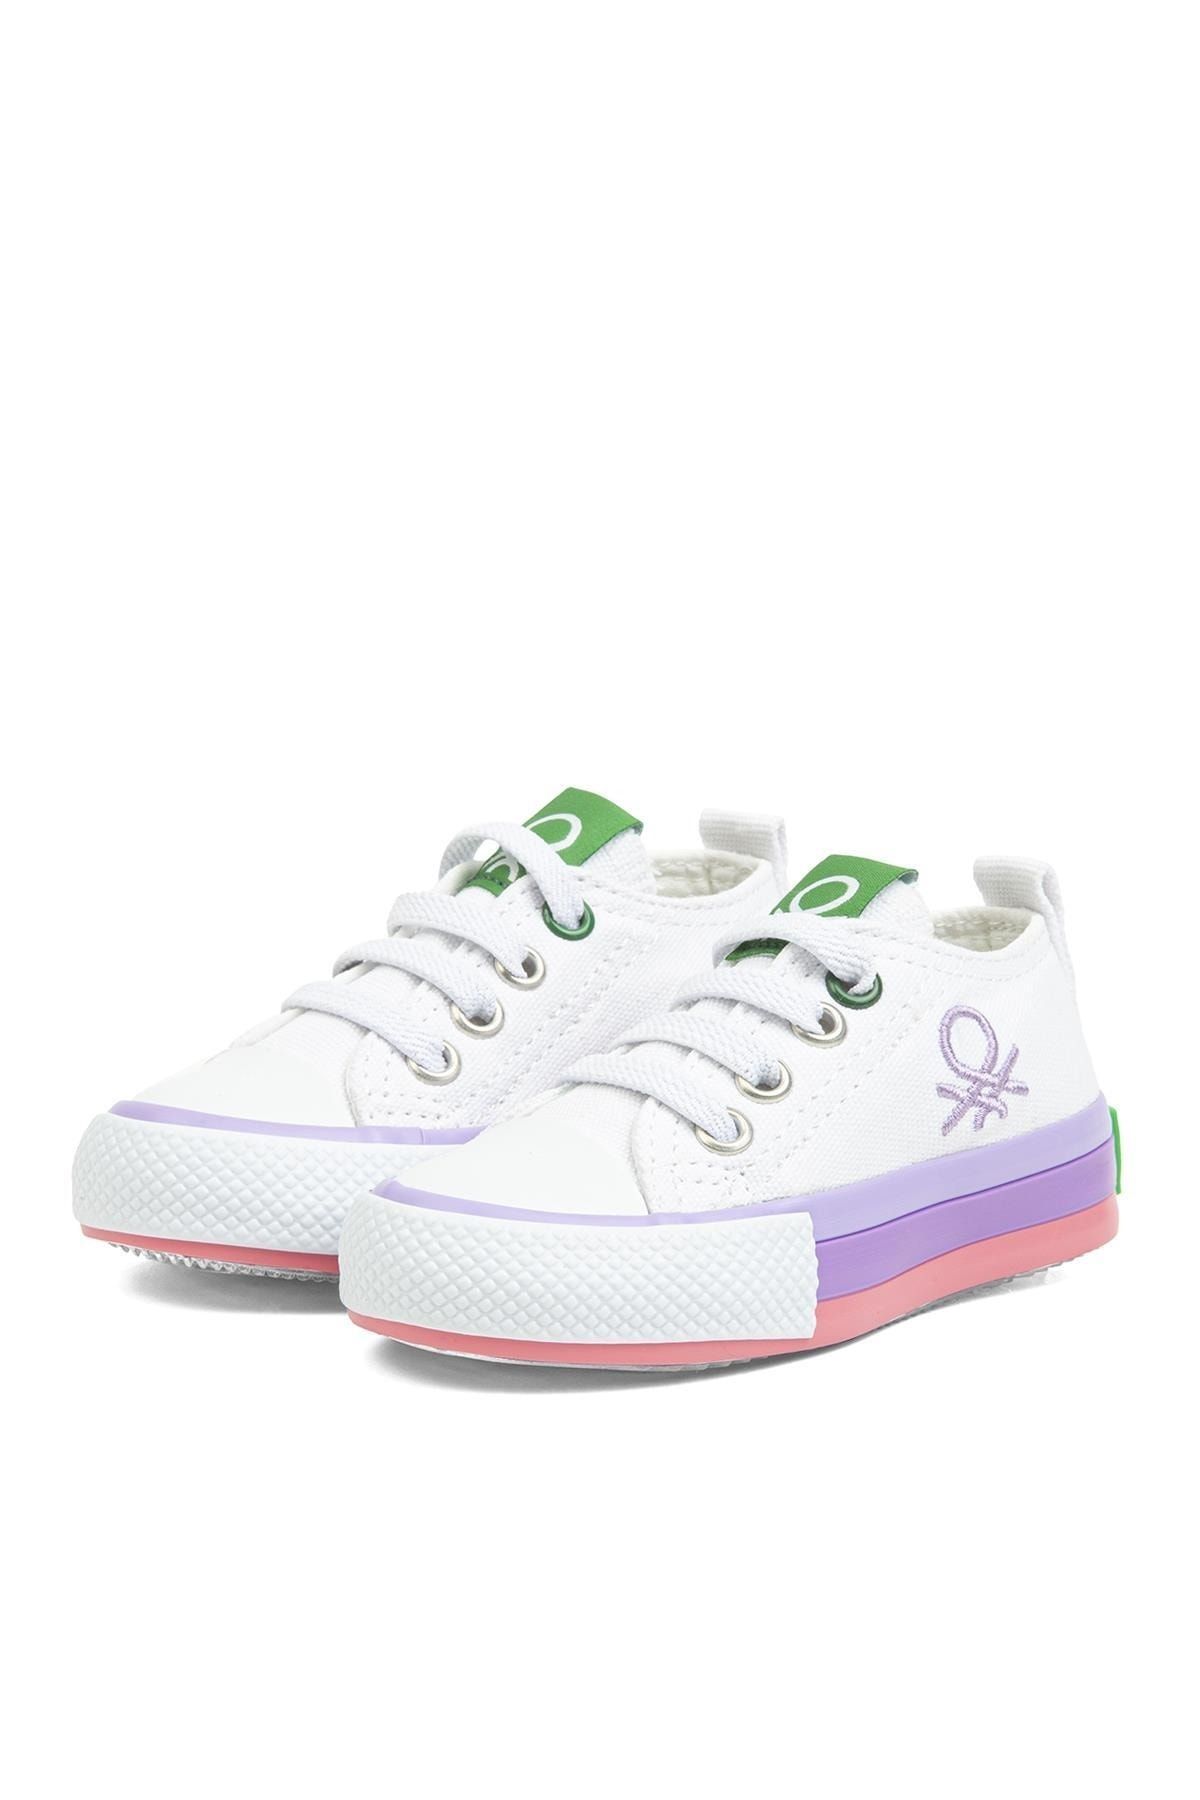 Benetton ® | Bn-30652 - 3394 یاسی سفید کفش ورزشی بچه گانه